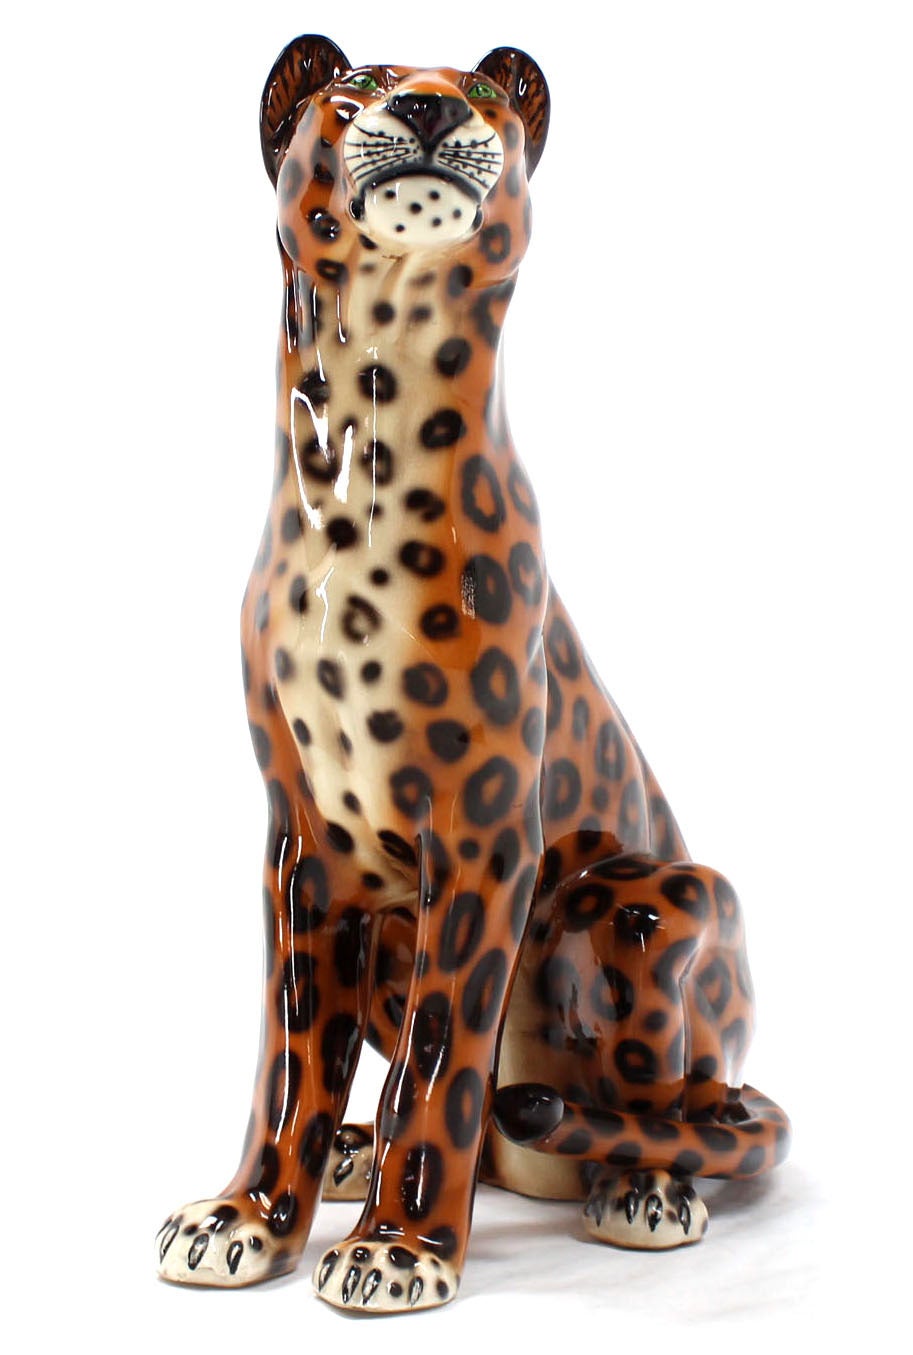 American Tall Large Ceramic Porcelain Sculpture of a Cheetah Leopard Big Cat circa 1970s